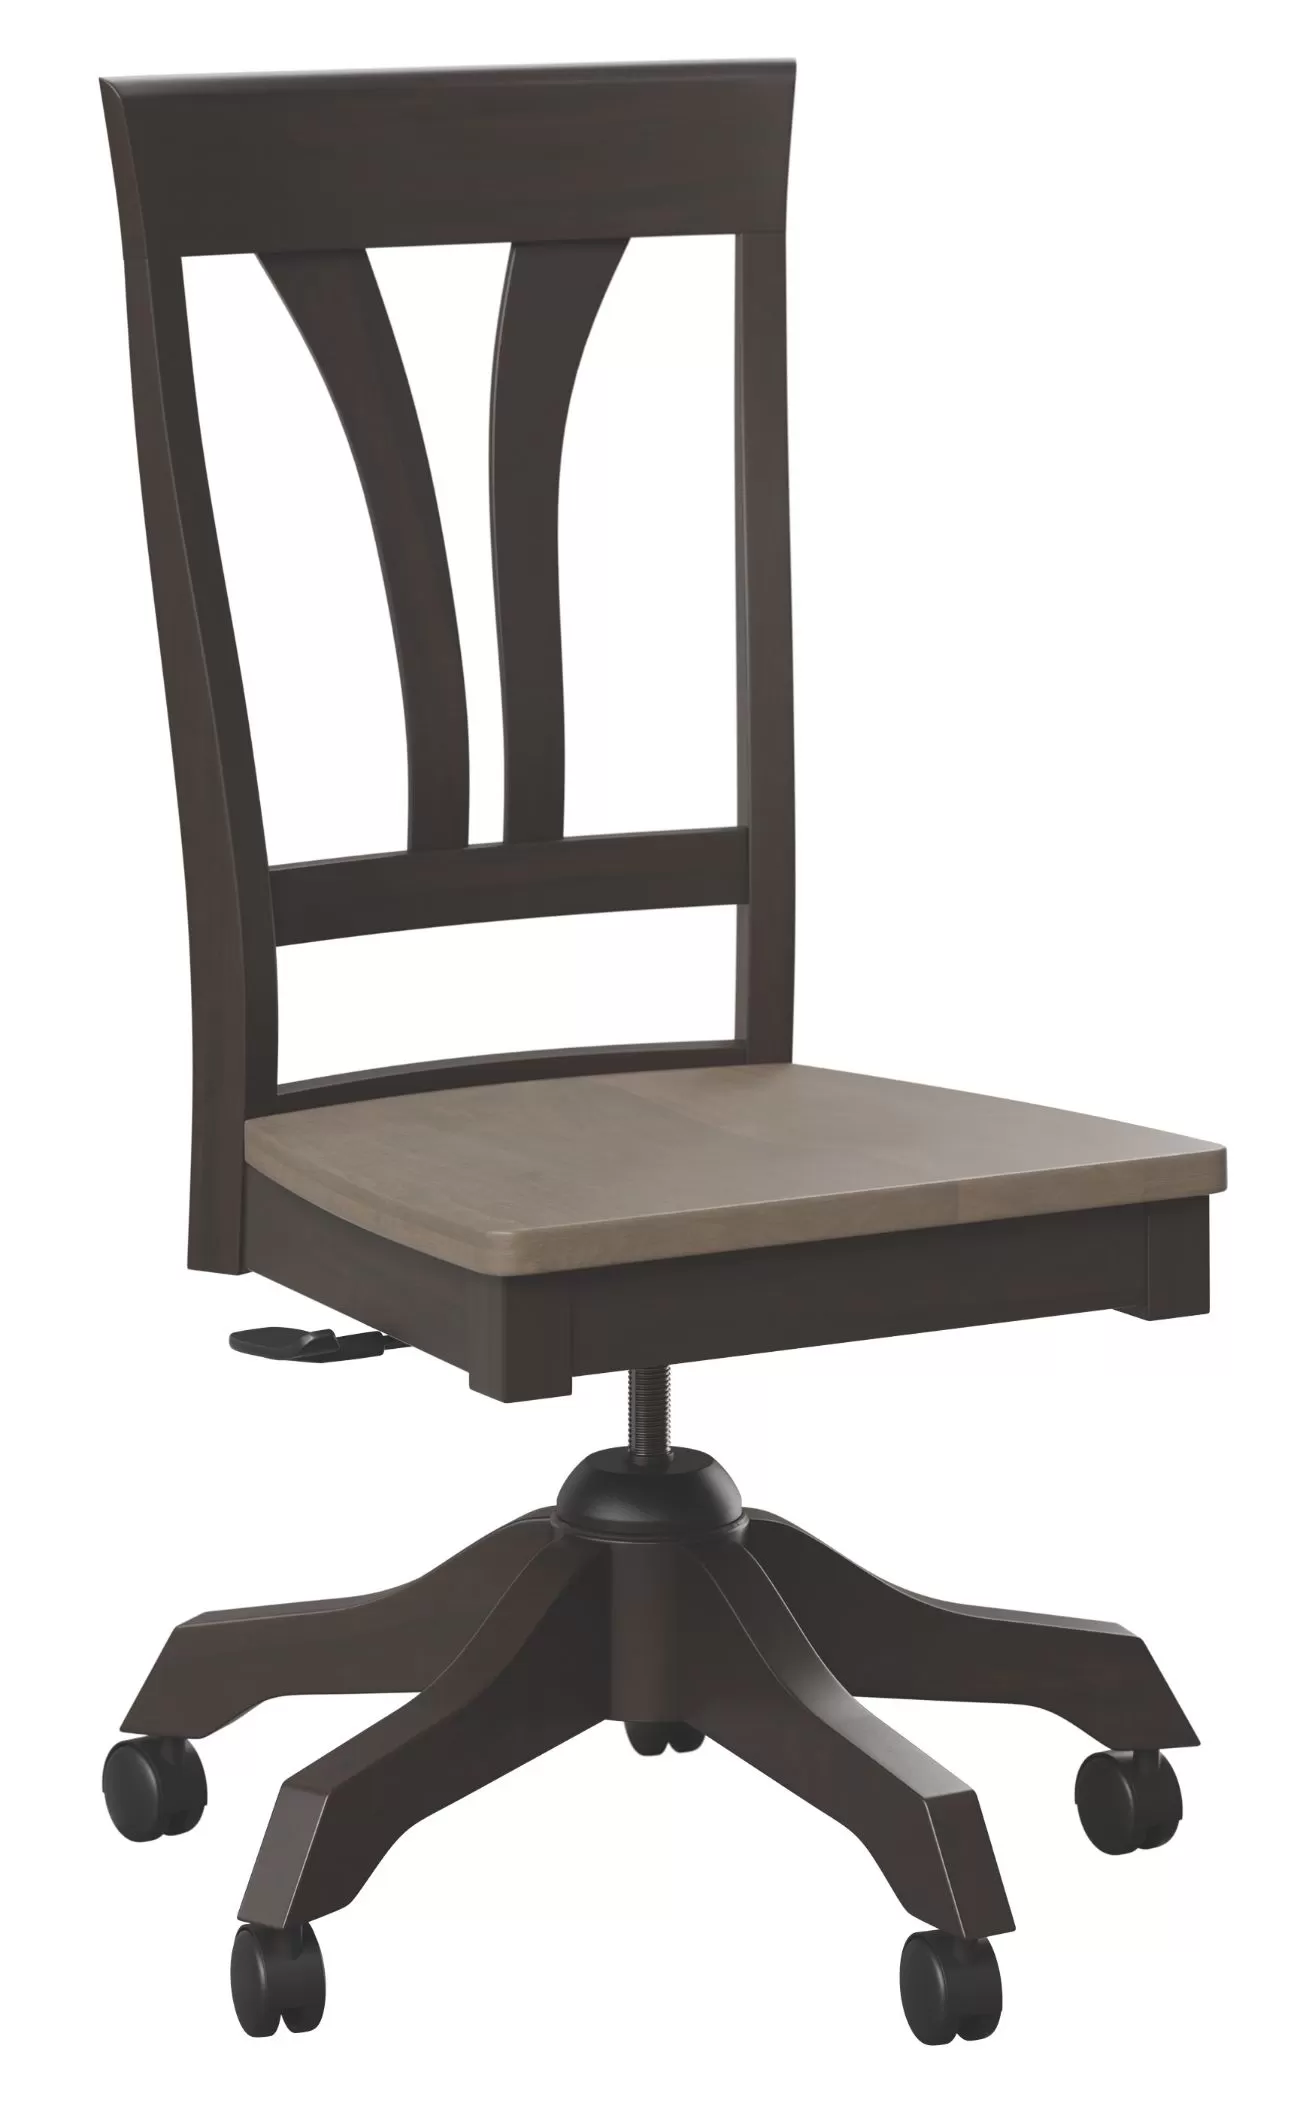 Glenwood side desk chair